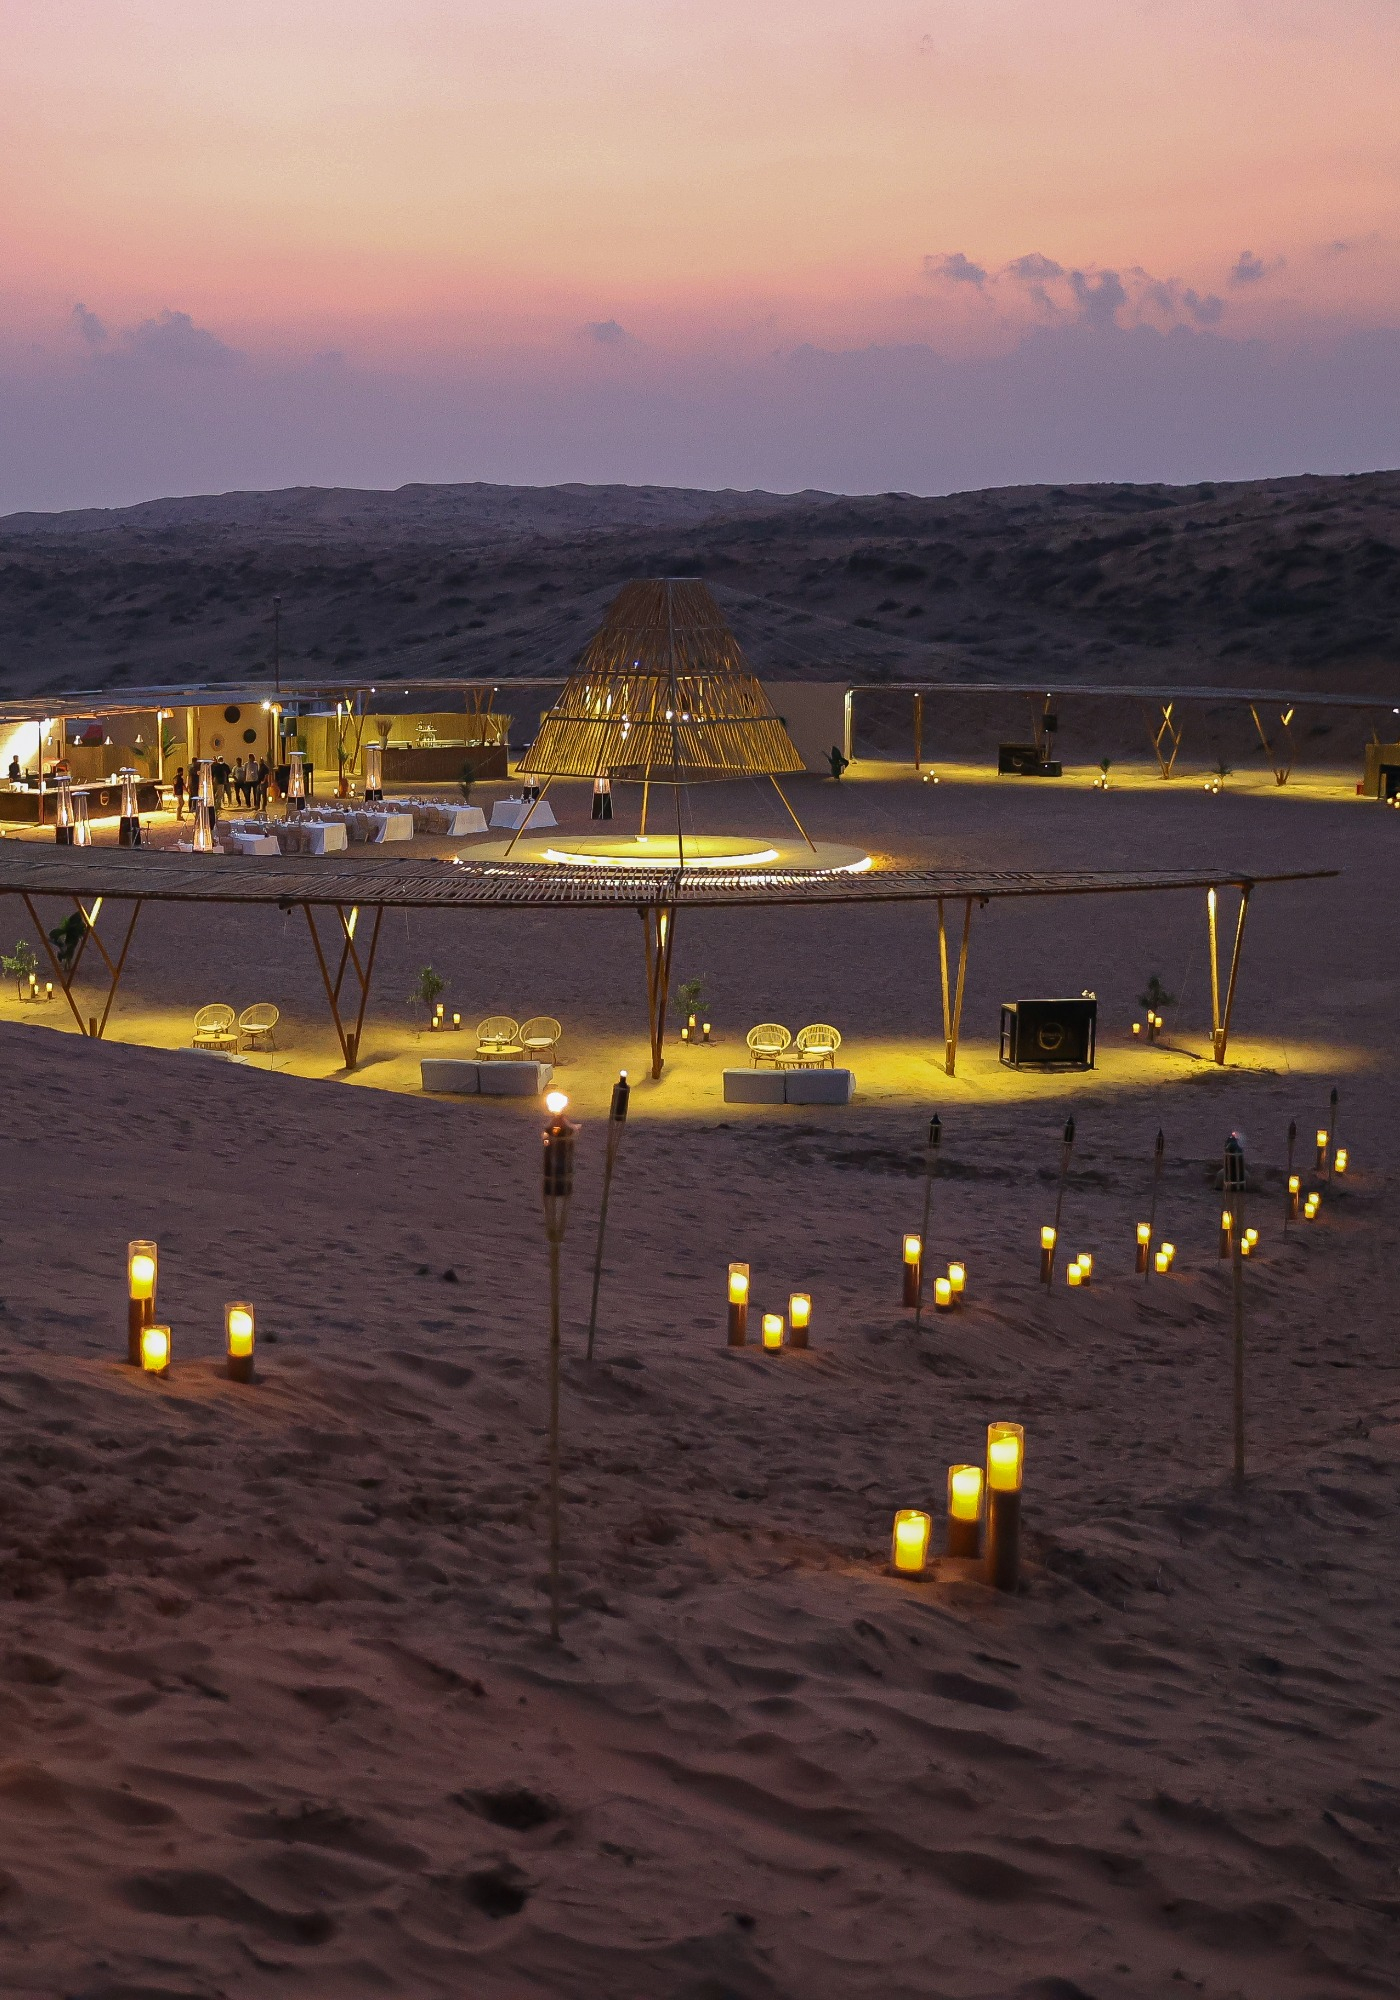 Sonara Al Wadi camp view